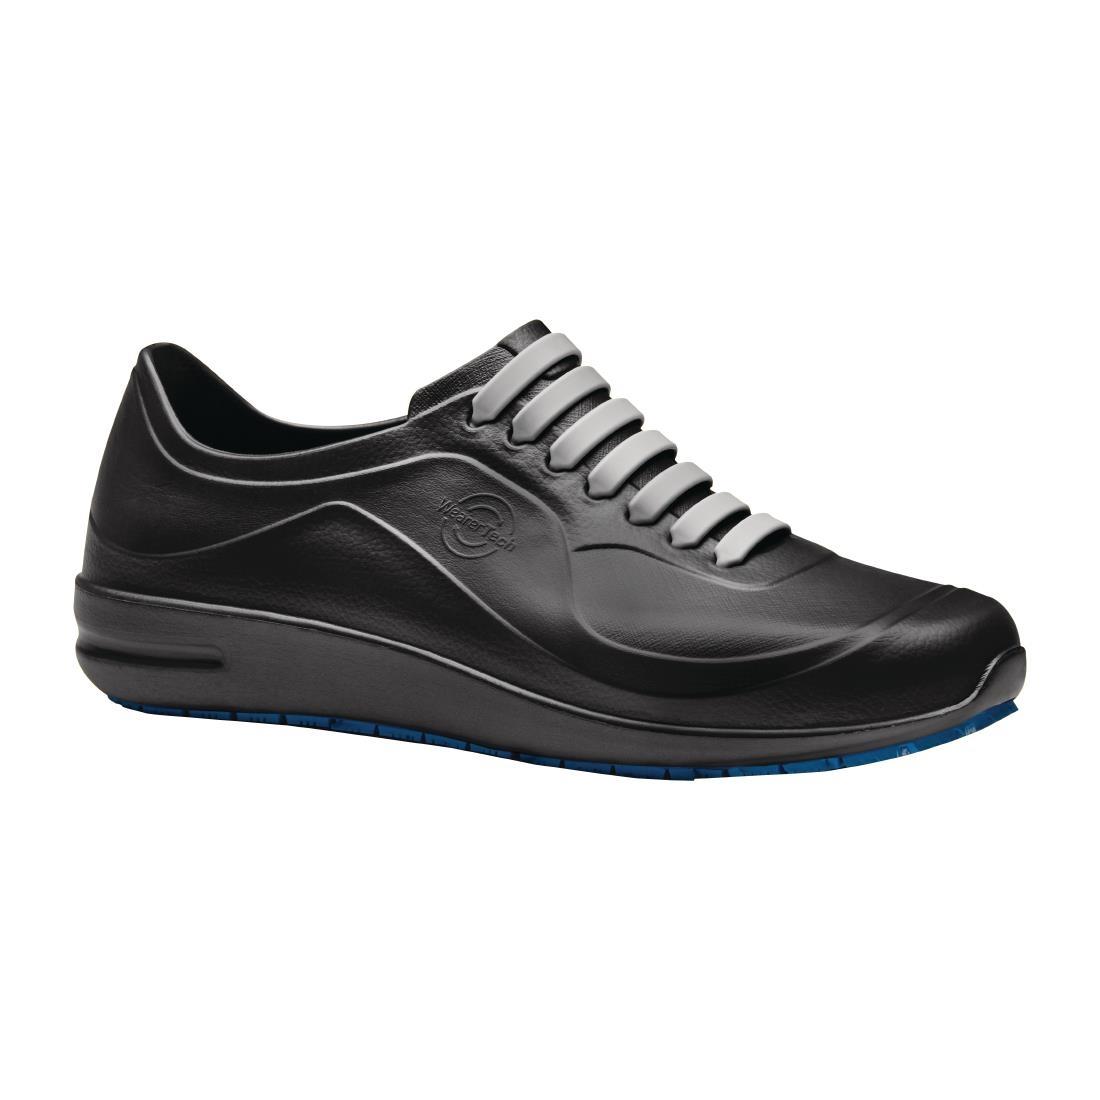 WearerTech Unisex Energise Black Safety Shoes Black 4 - BB190-37  - 2